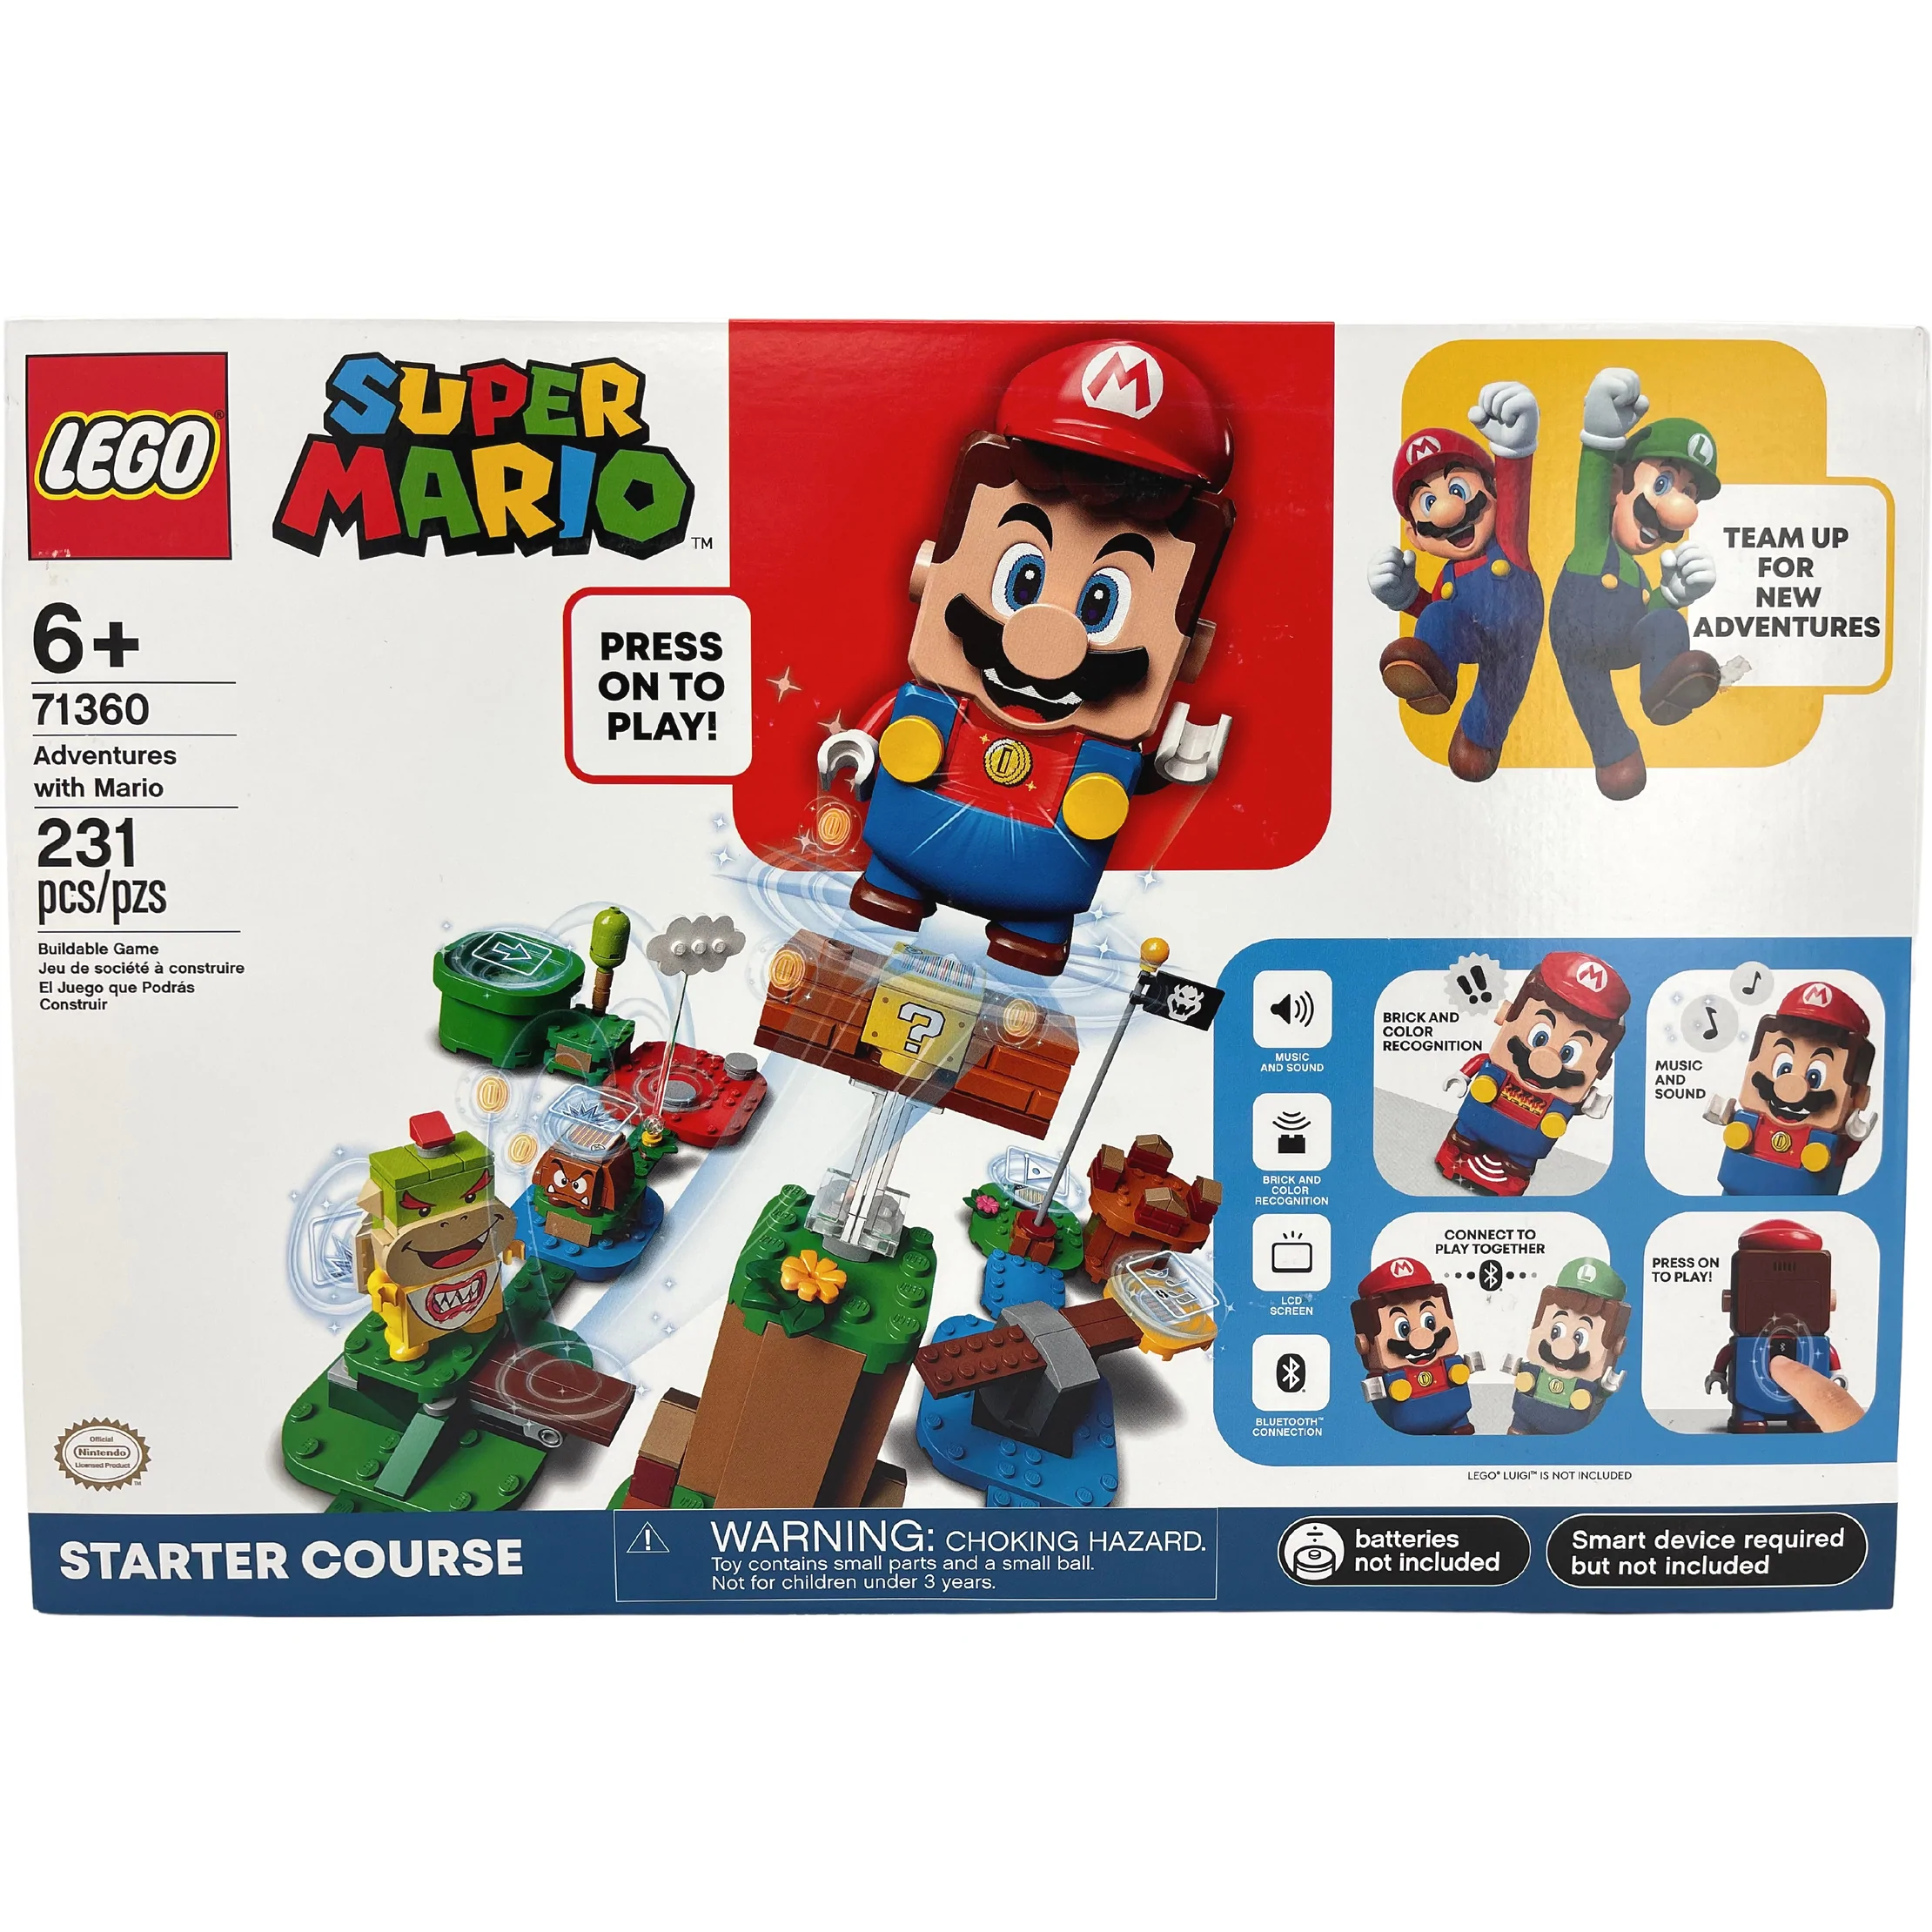 LEGO x Super Mario "Adventures with Mario" Buildable Game / 71360 / 231 Pieces